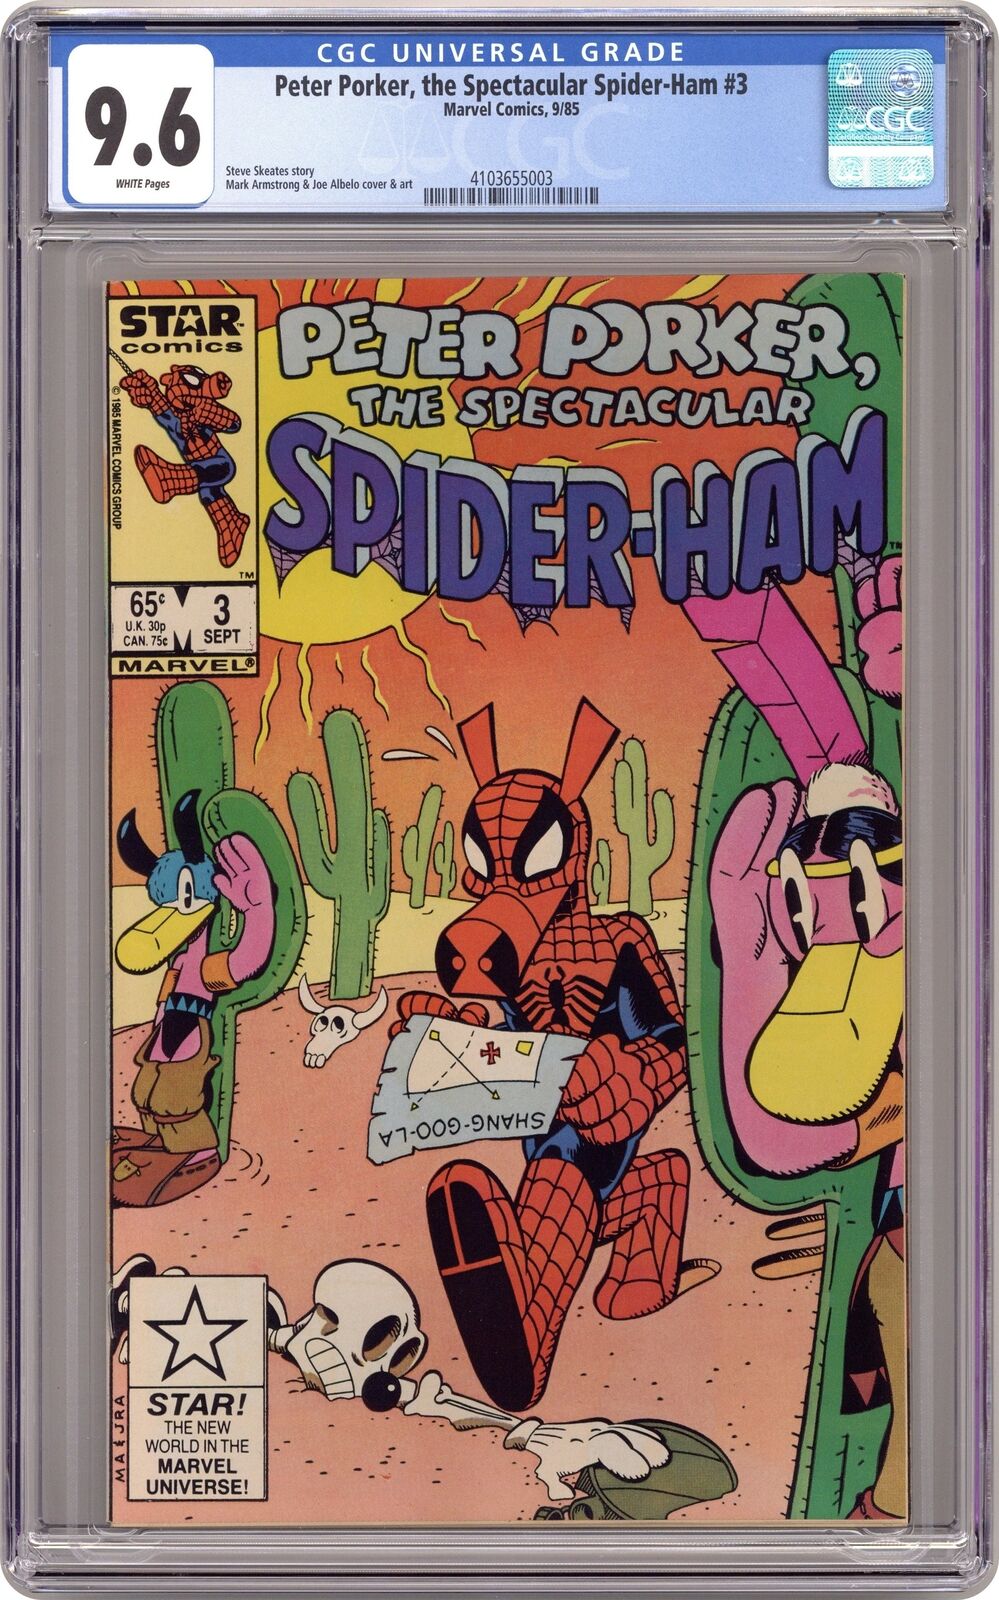 Peter Porker the Spectacular Spider-Ham #3 CGC 9.6 1985 4103655003